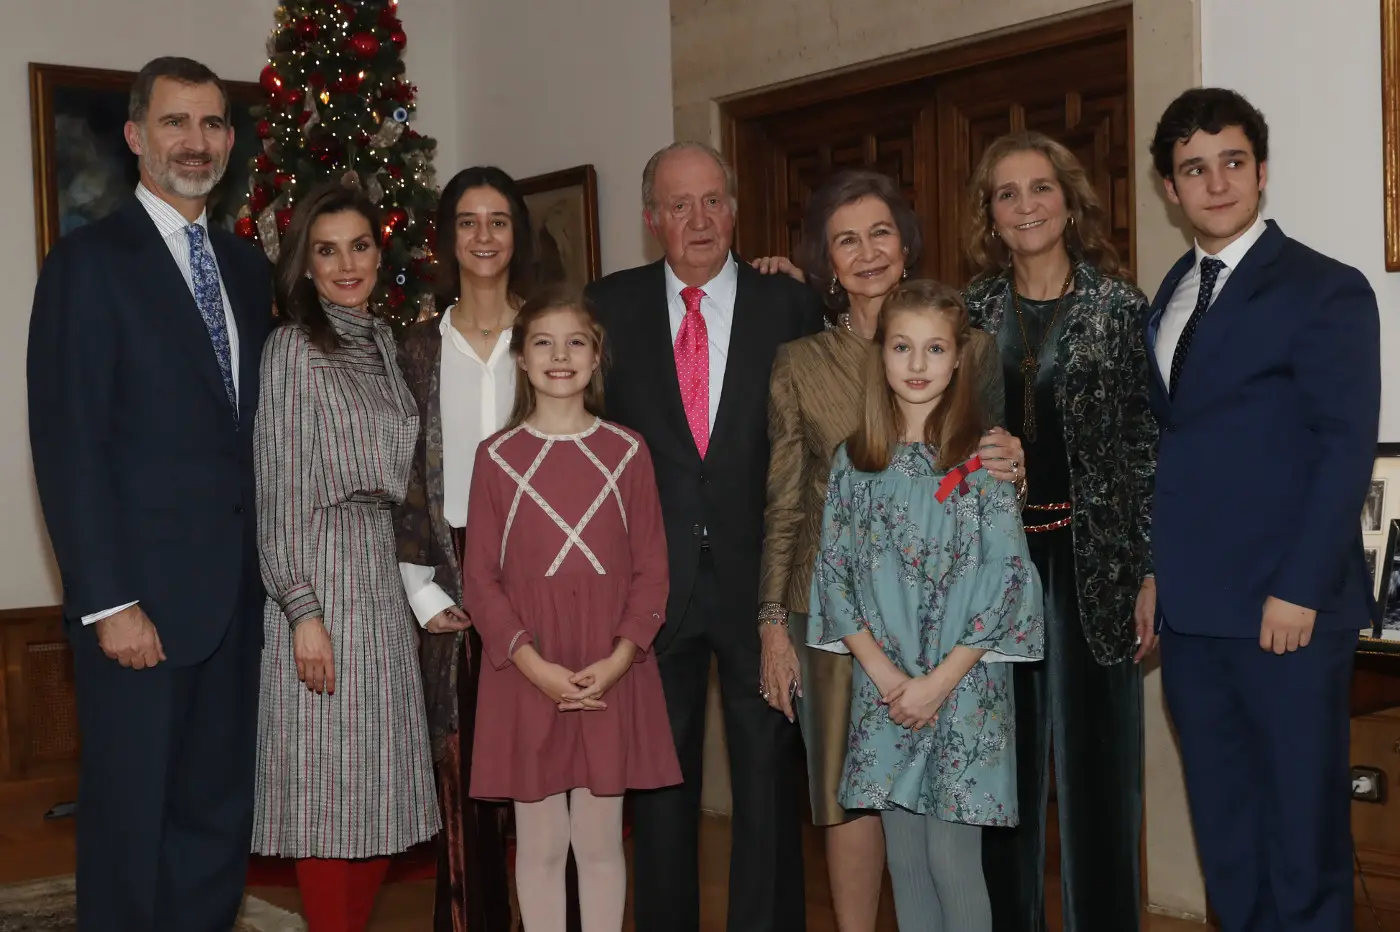 Spanish Royal Family celebrates 80th birthday of King Juan Carlos